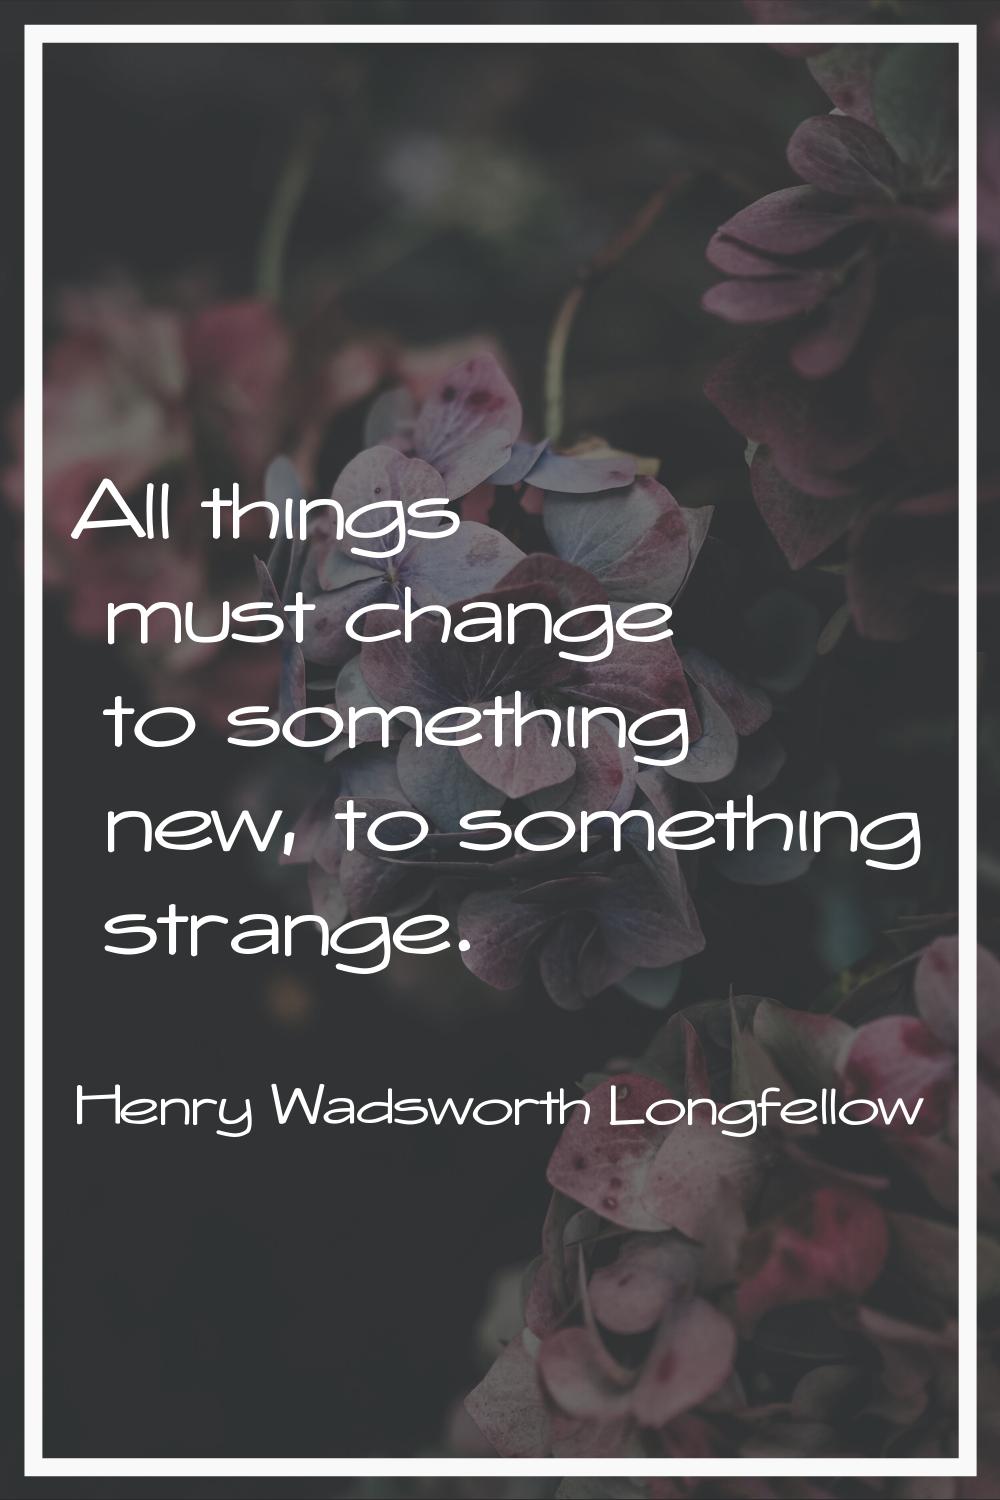 All things must change to something new, to something strange.